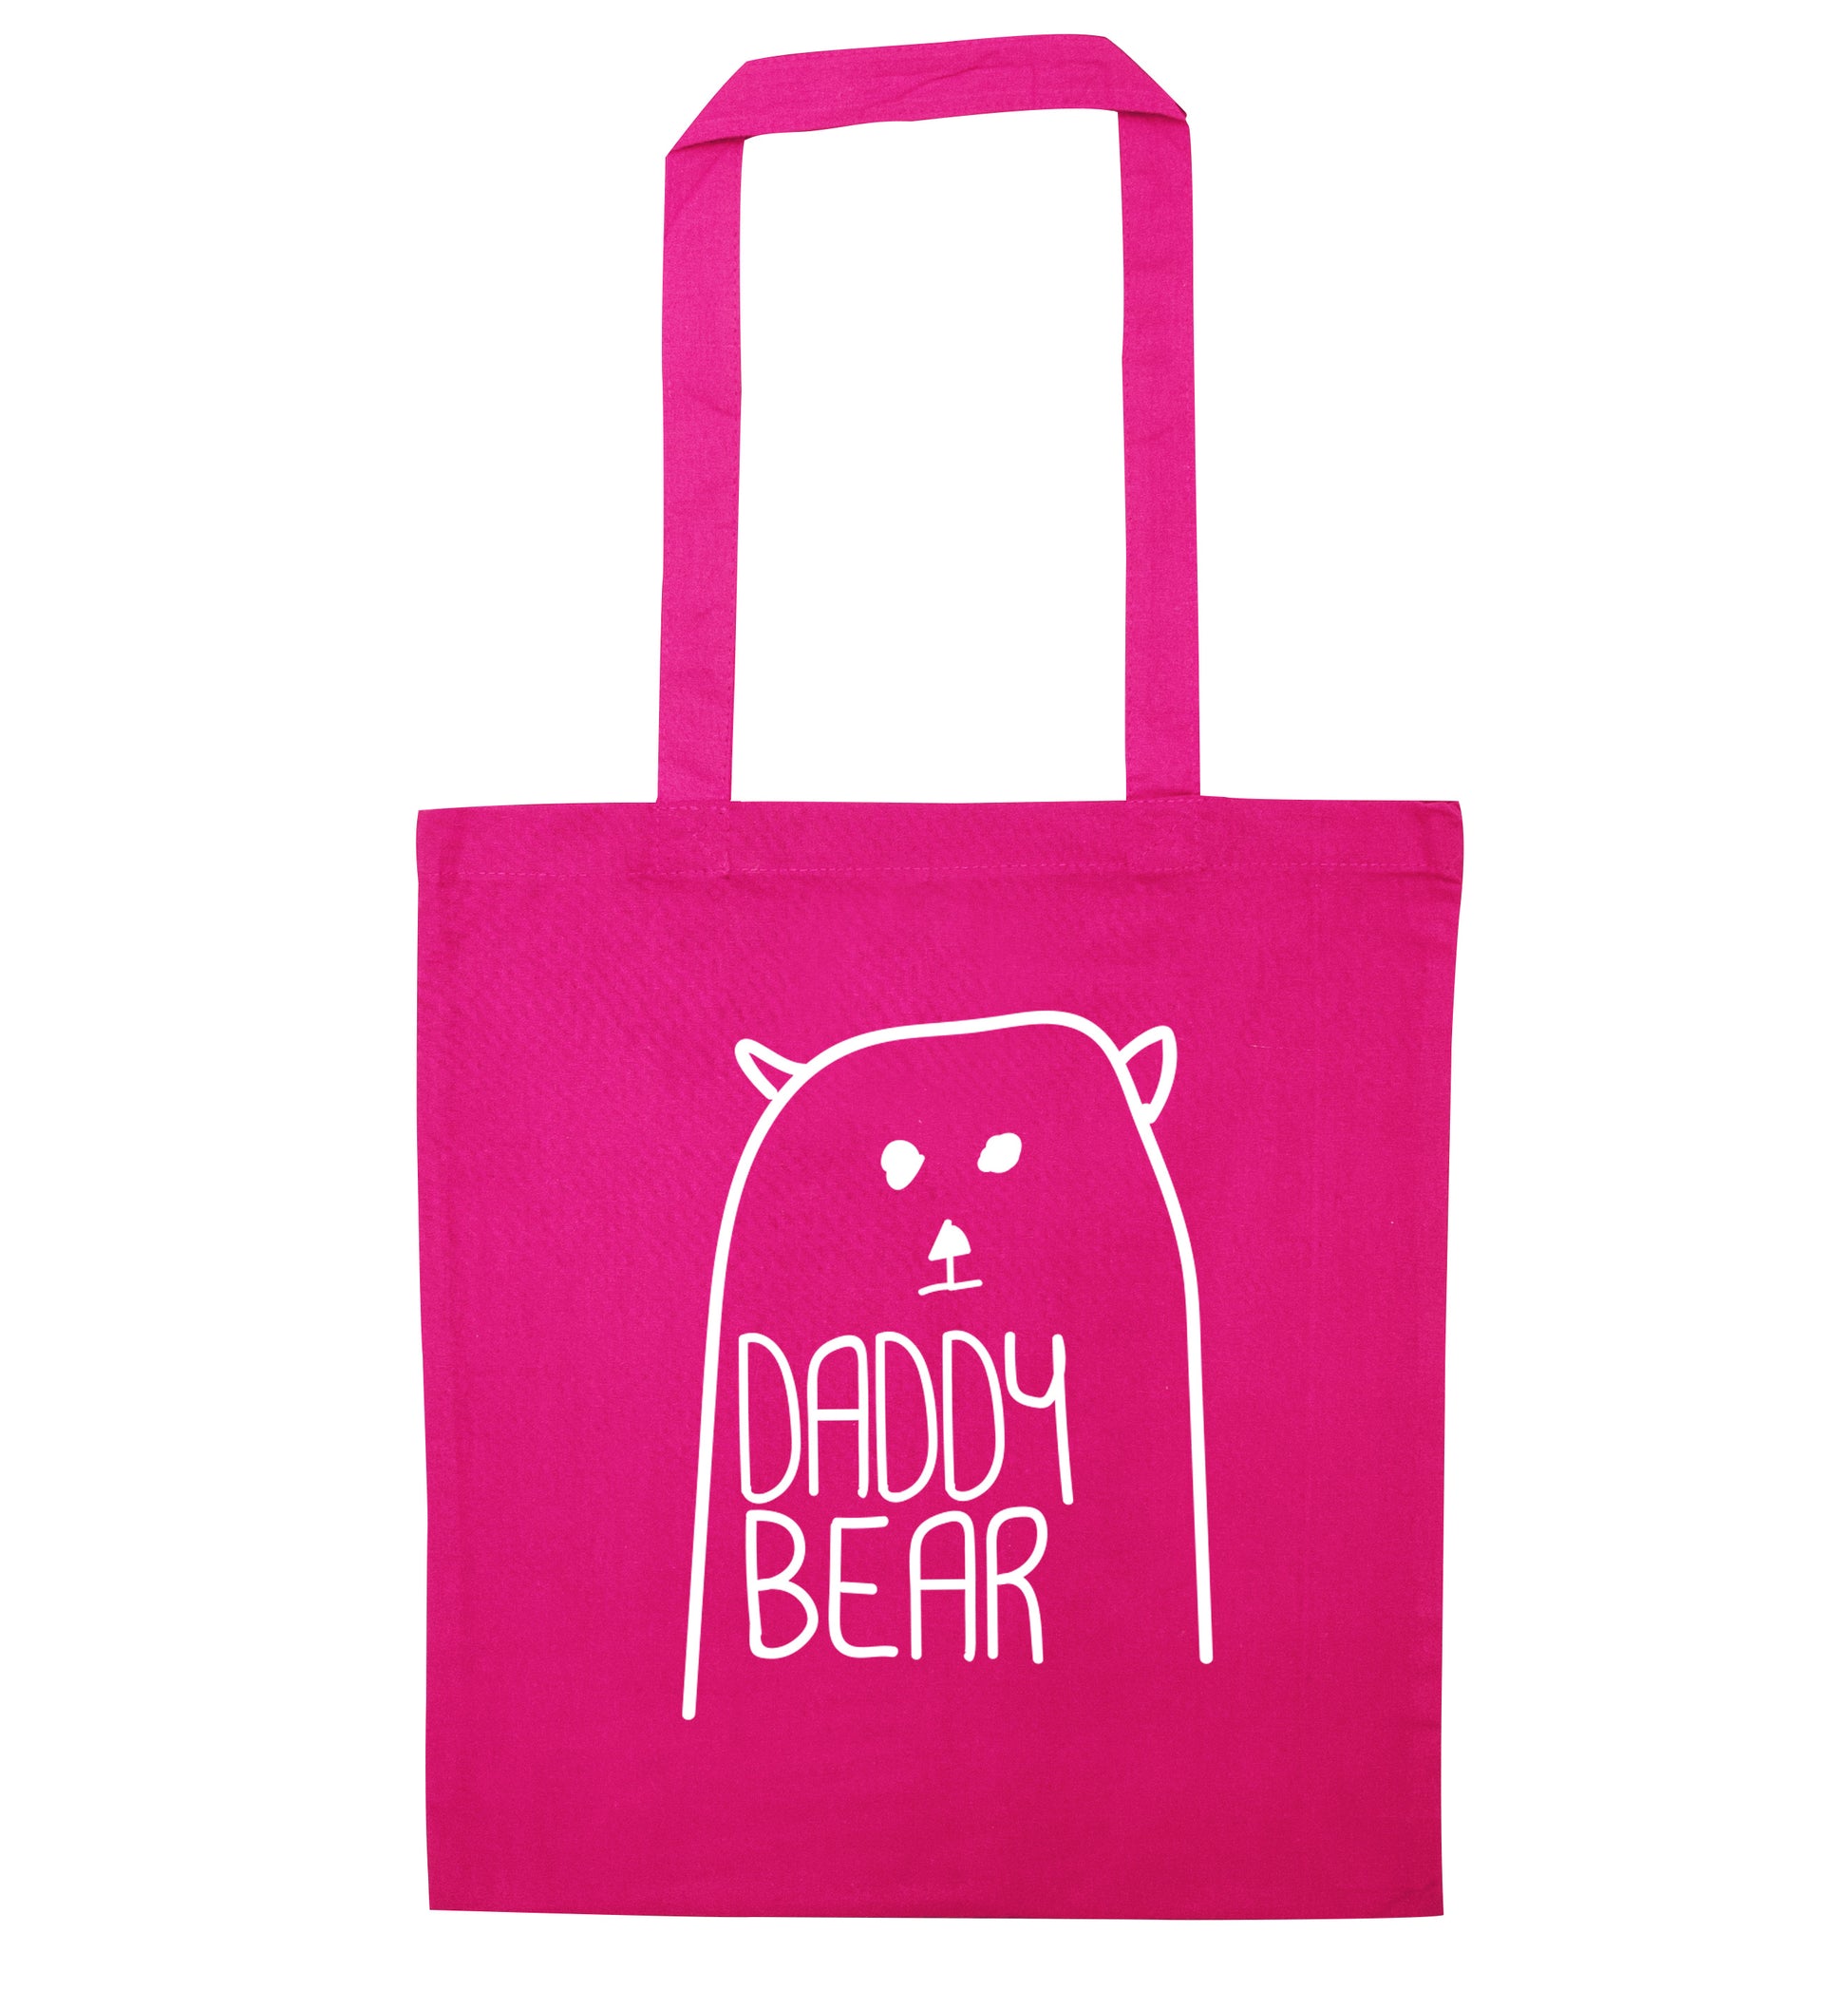 Daddy bear pink tote bag